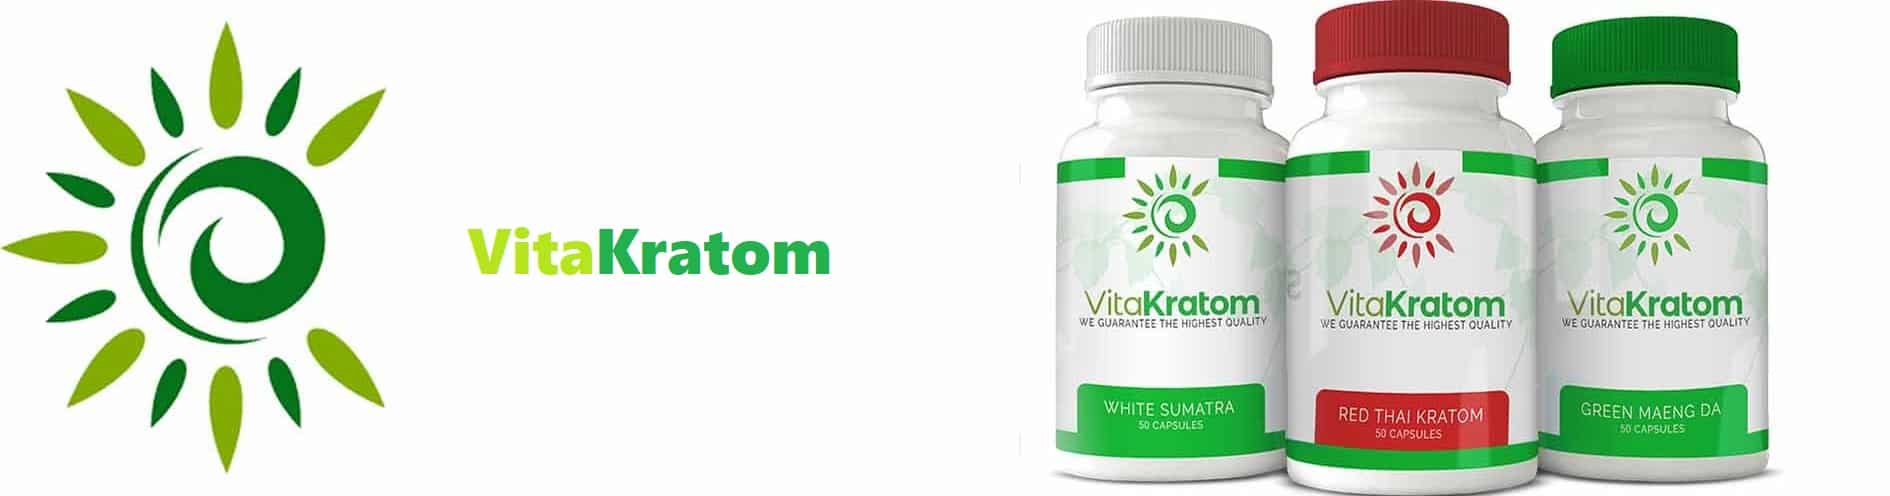 image of vitakratom products